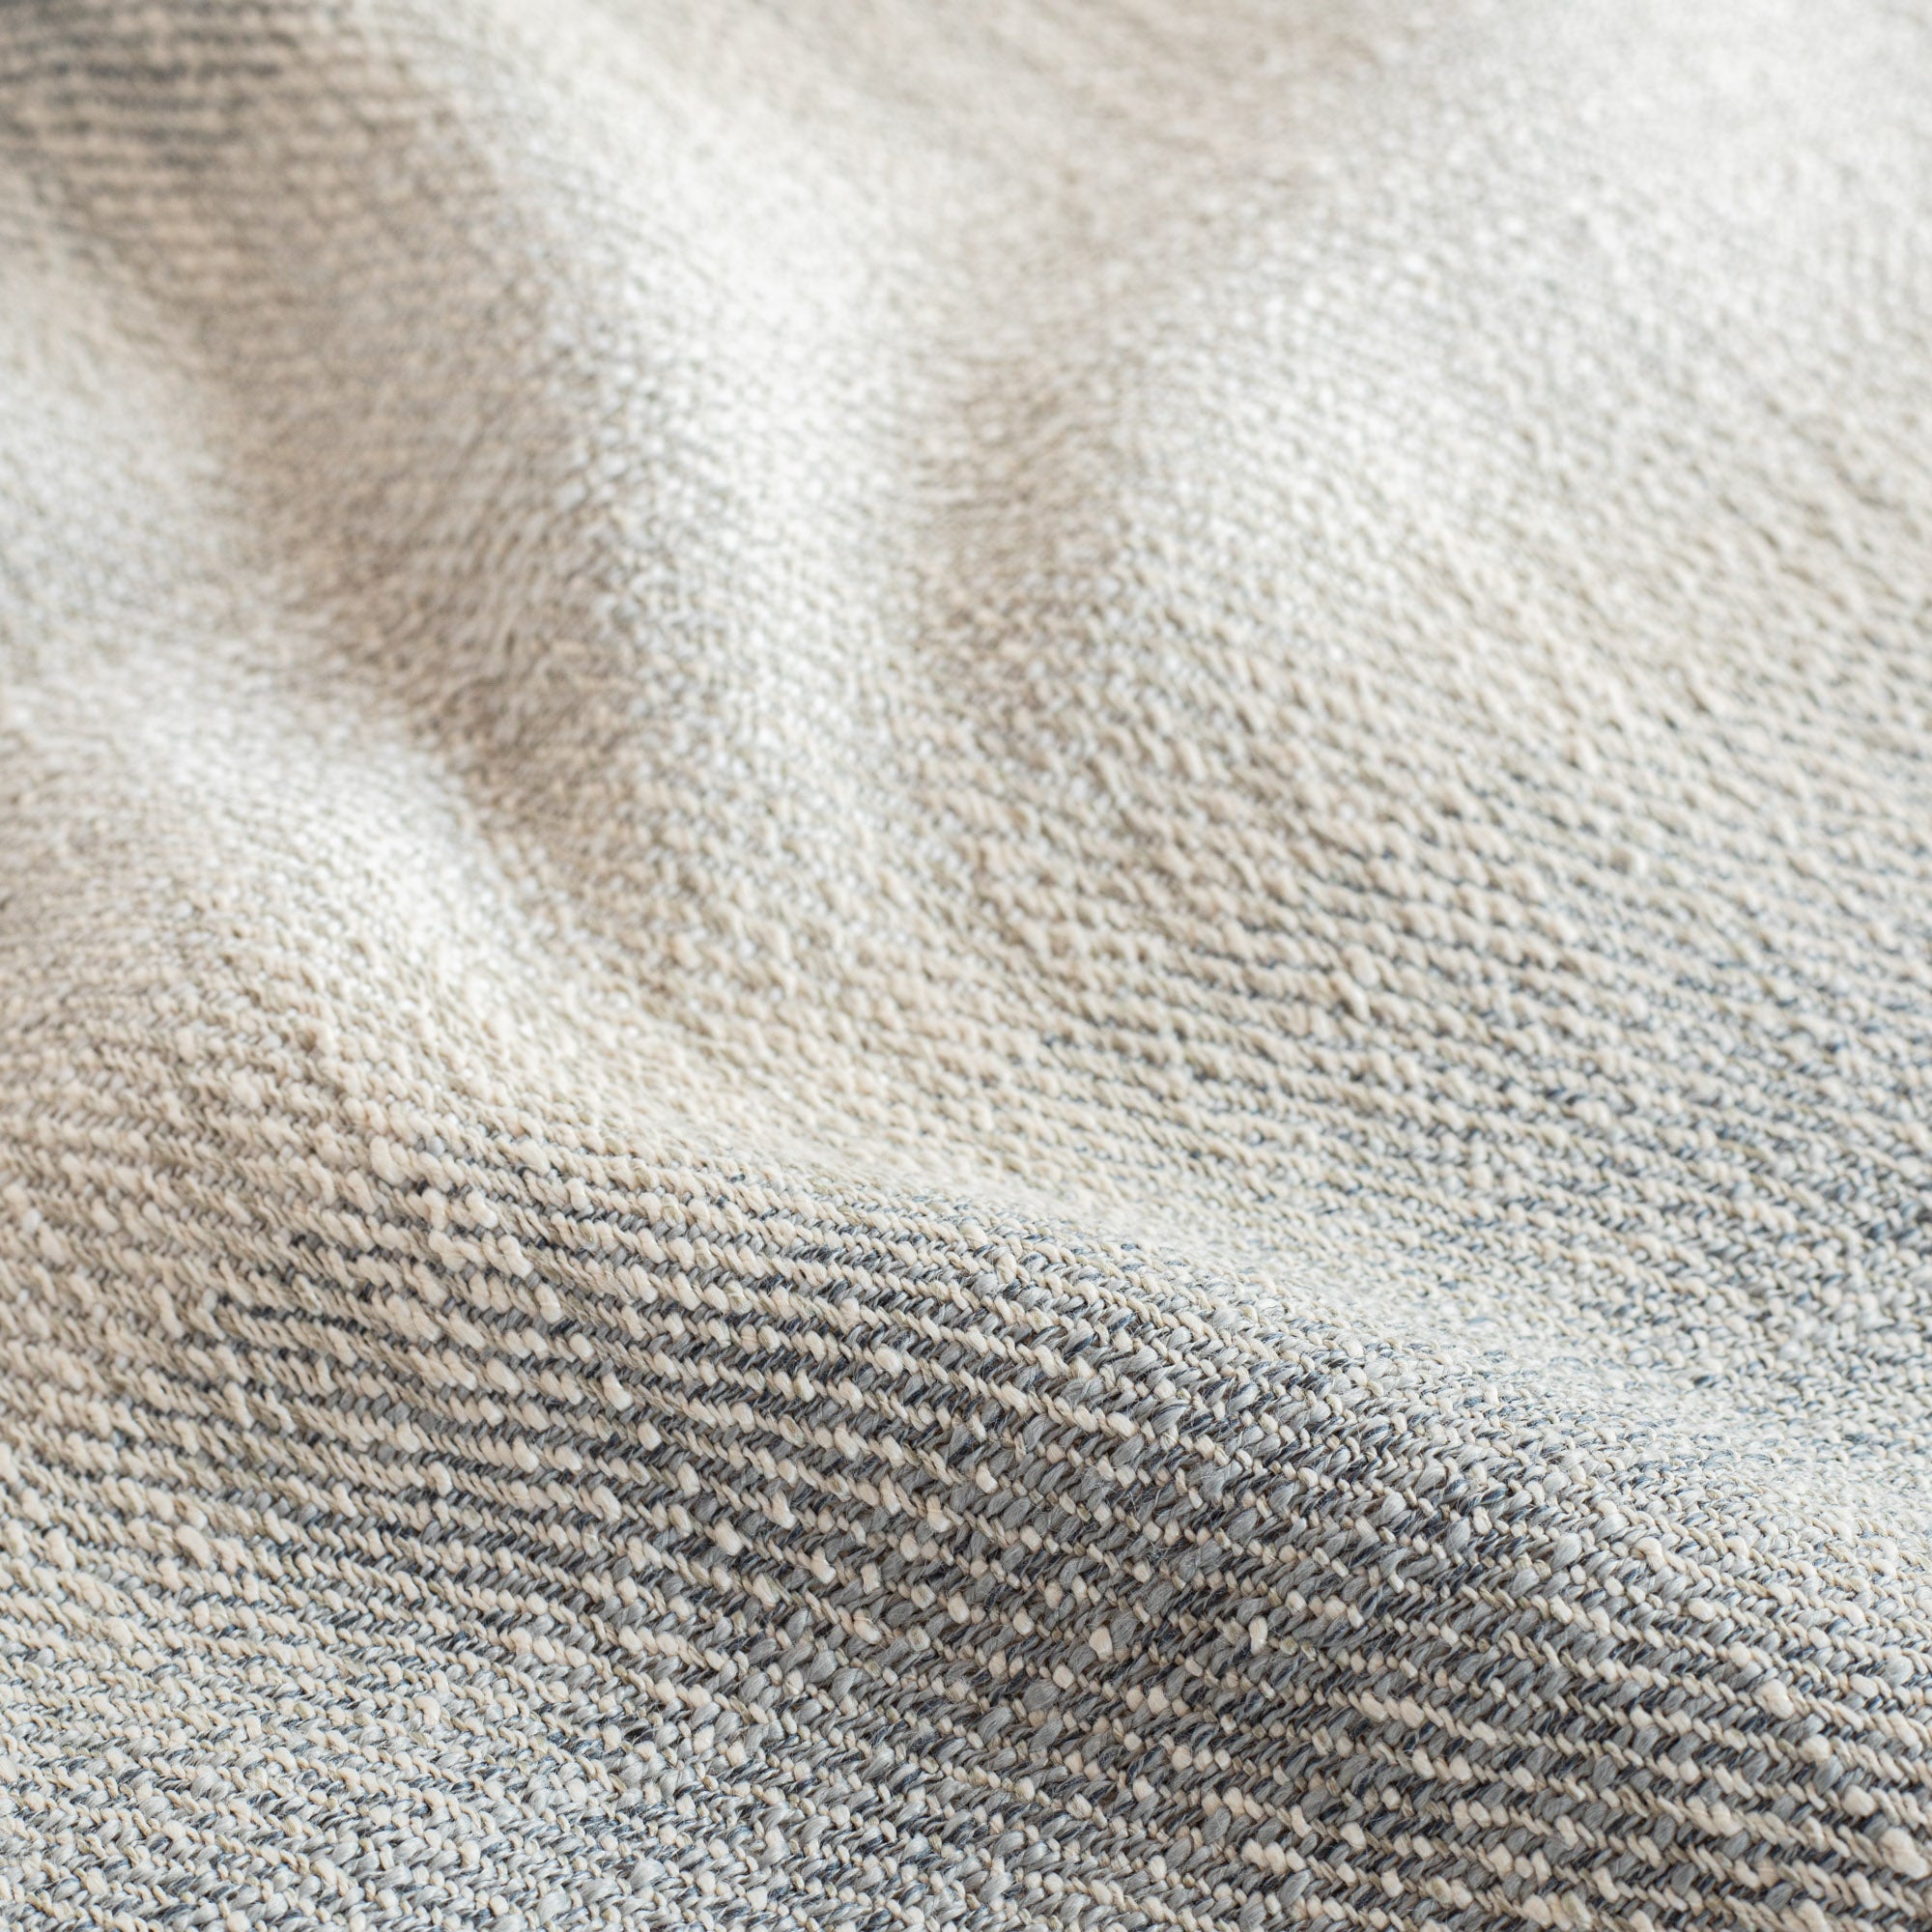 a denim blue and sandy gray ombre stripe home decor fabric